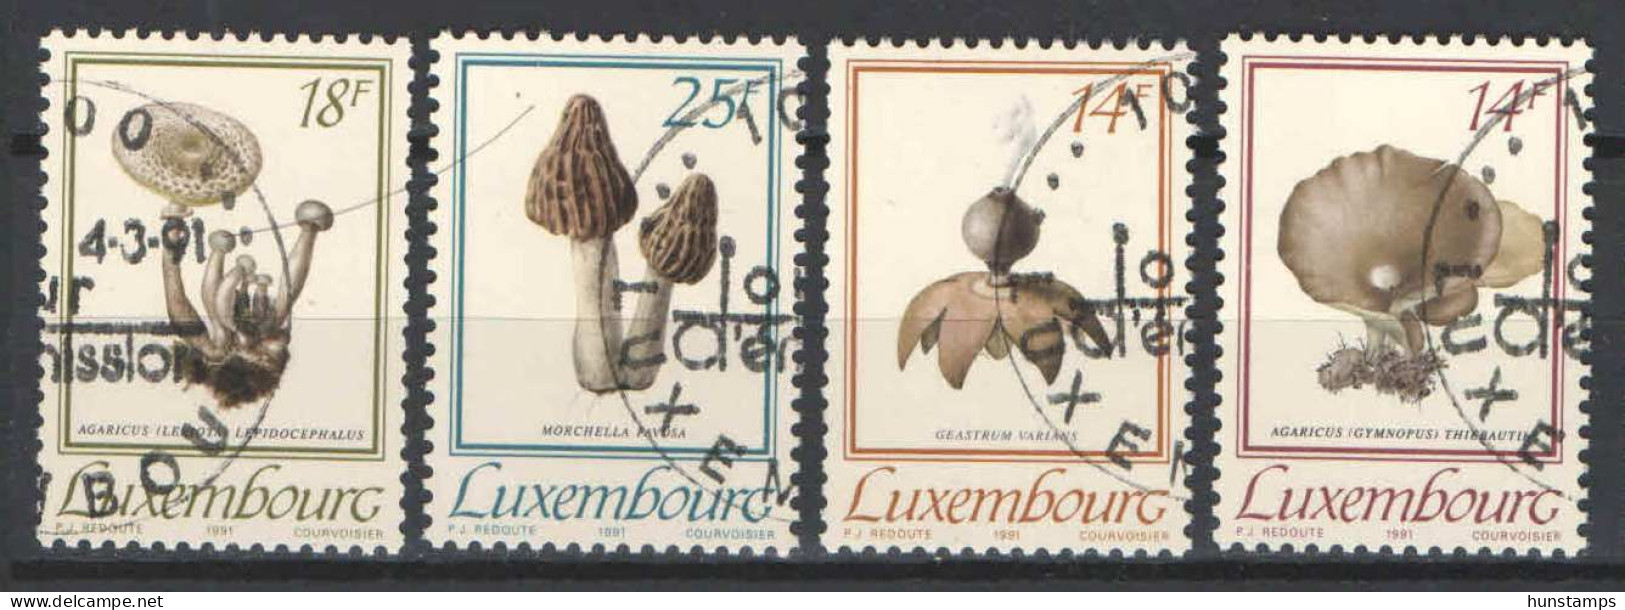 Luxembourg 1991. Mushrooms Nice Set, Used - Oblitérés